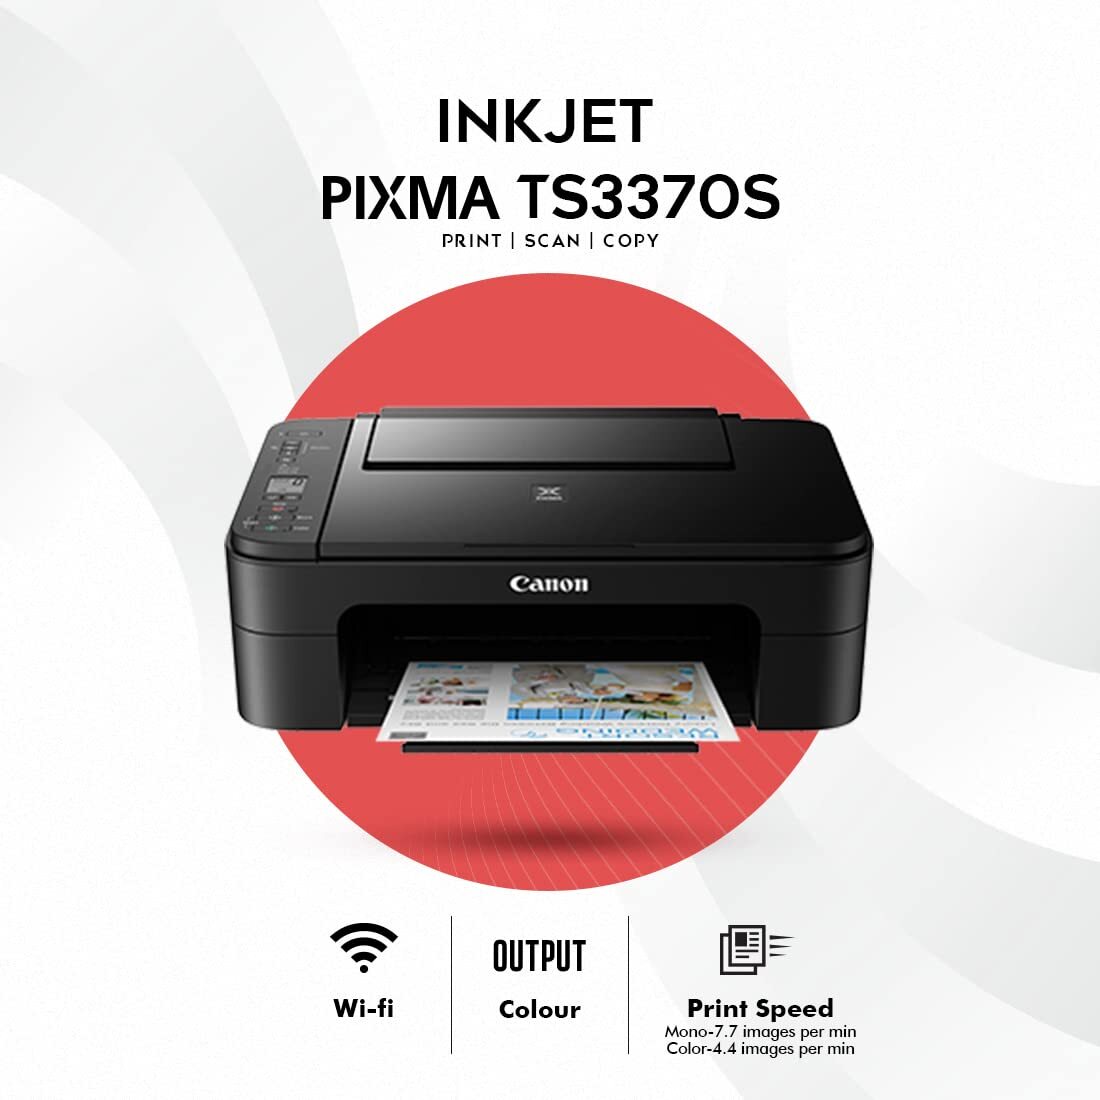 PIXMA TS3370s PRINTER